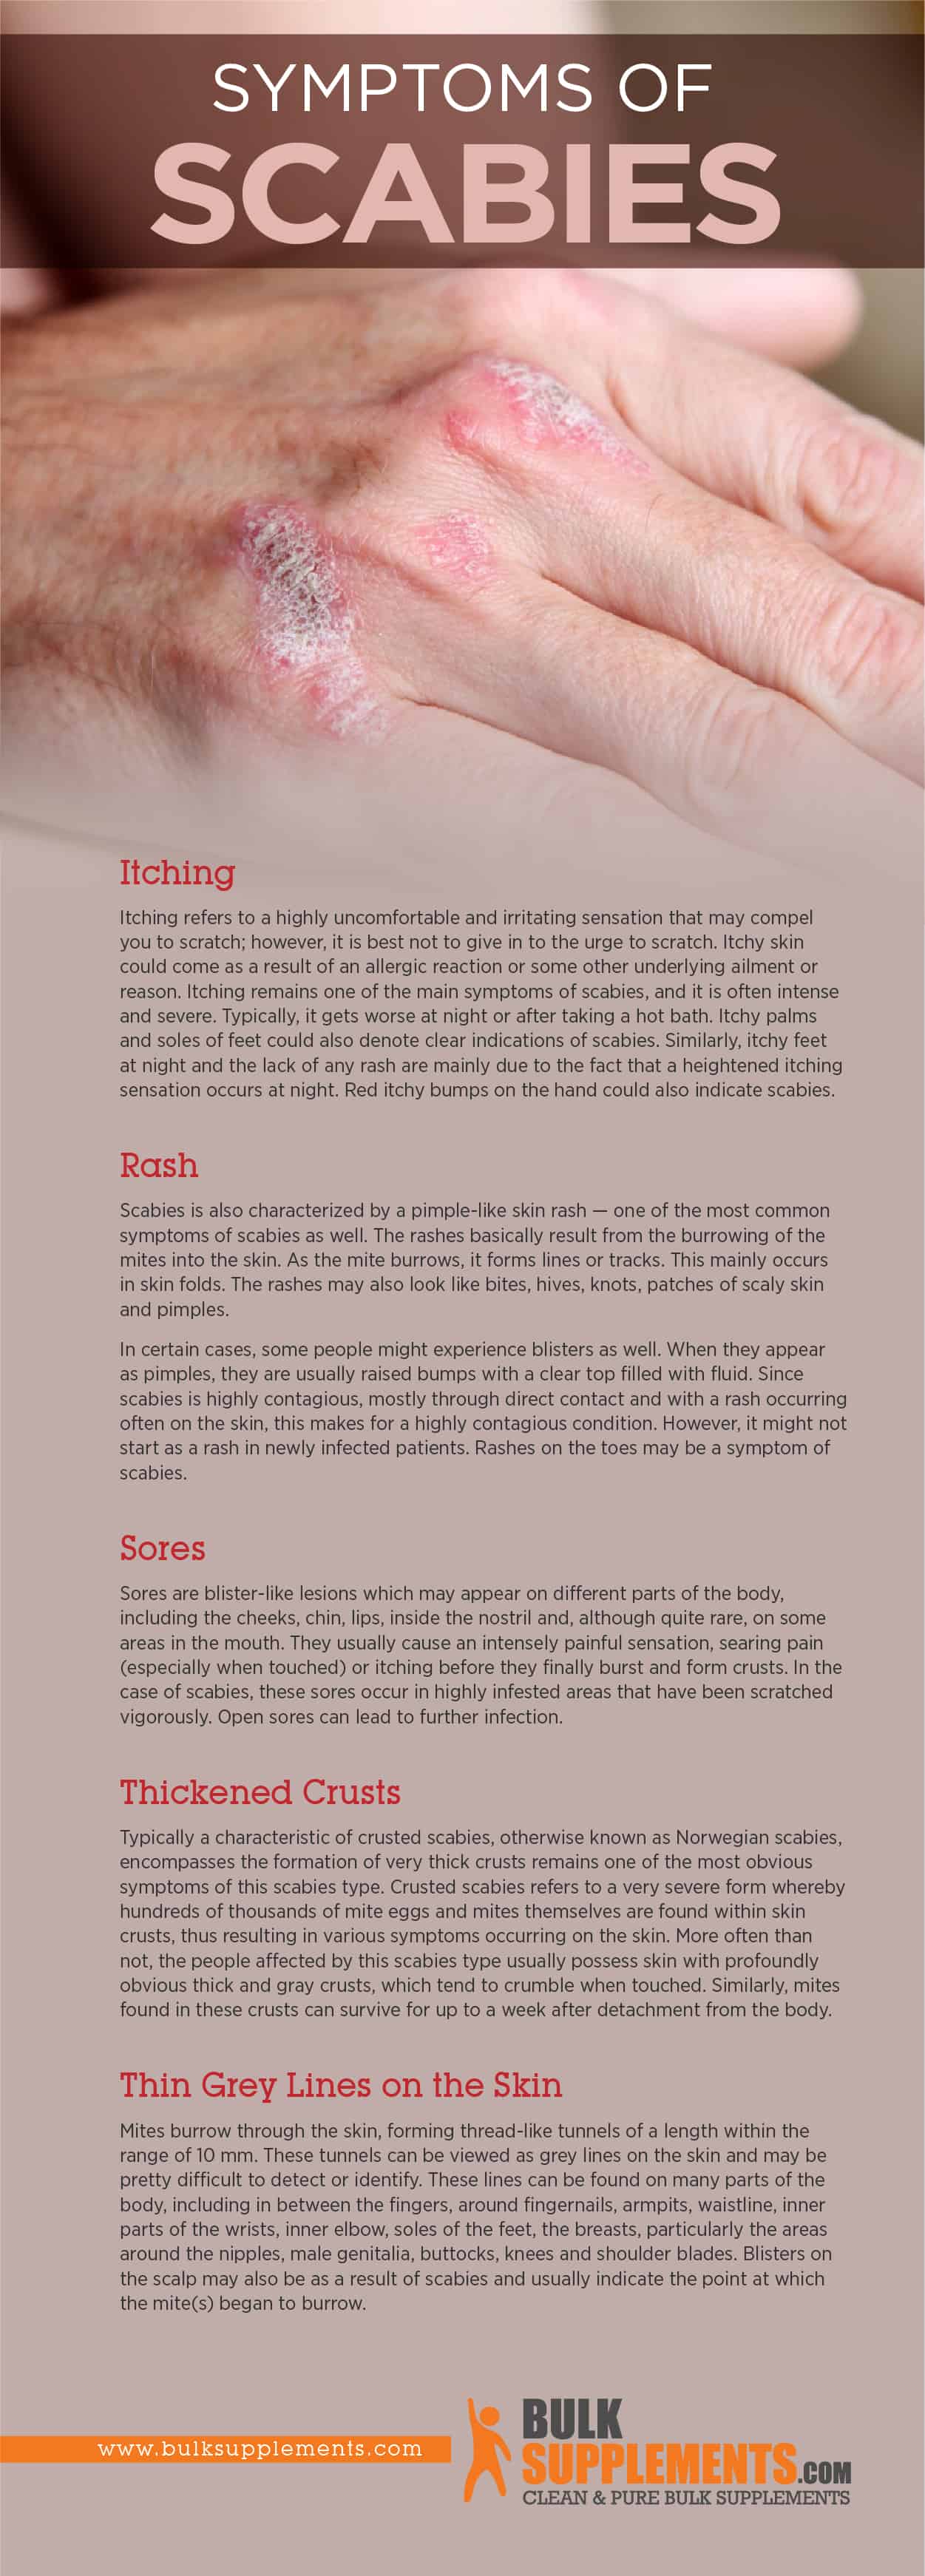 Symptoms of Scabies